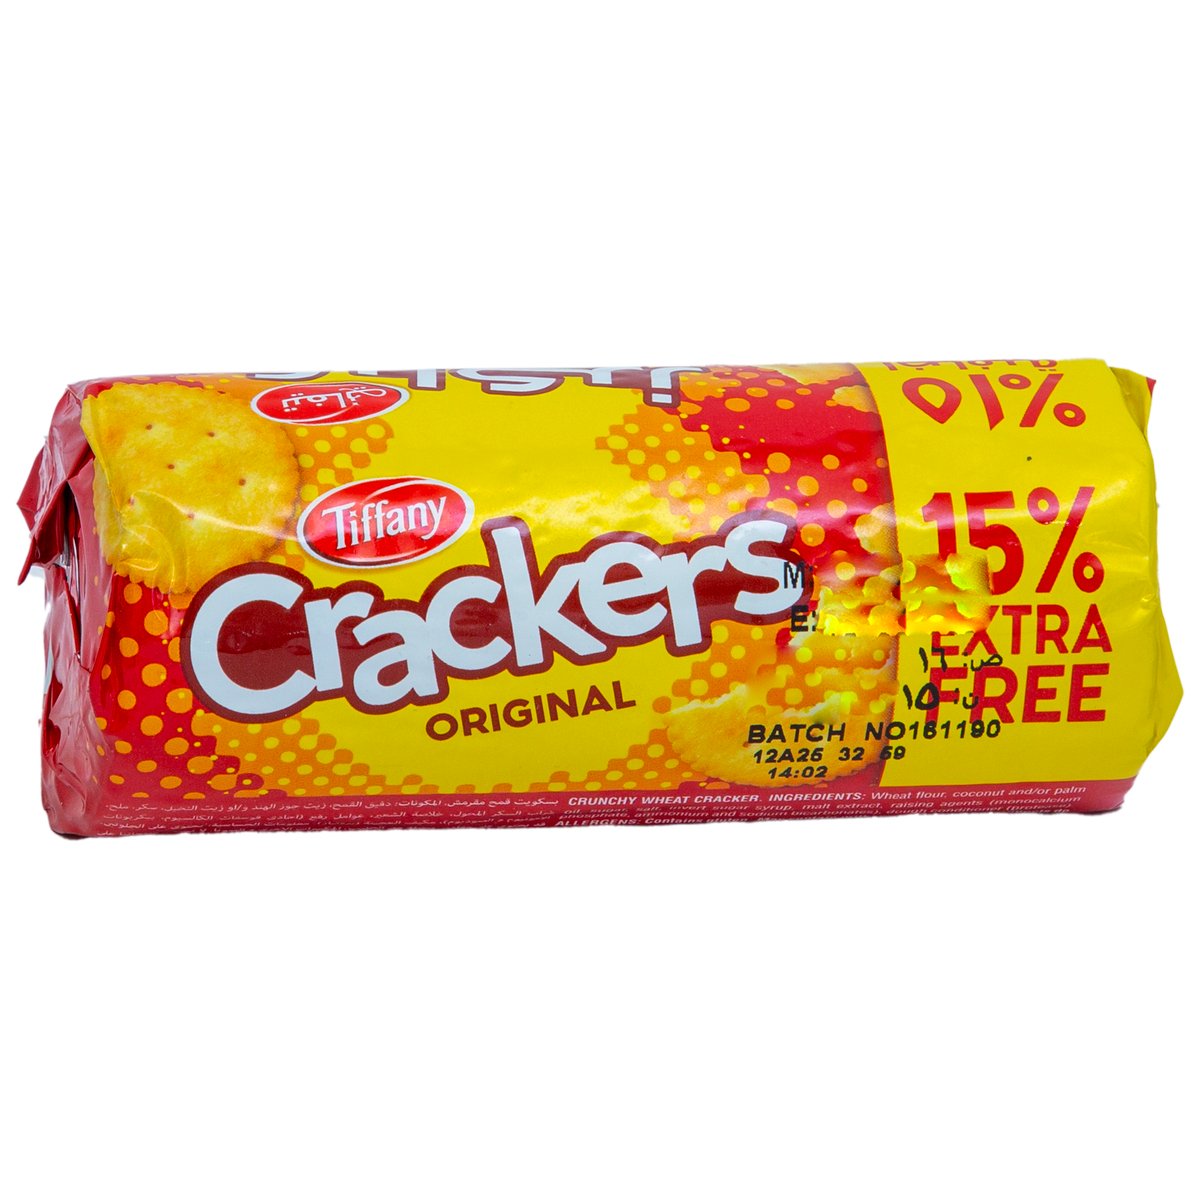 Tiffany Crackers Original 52 g